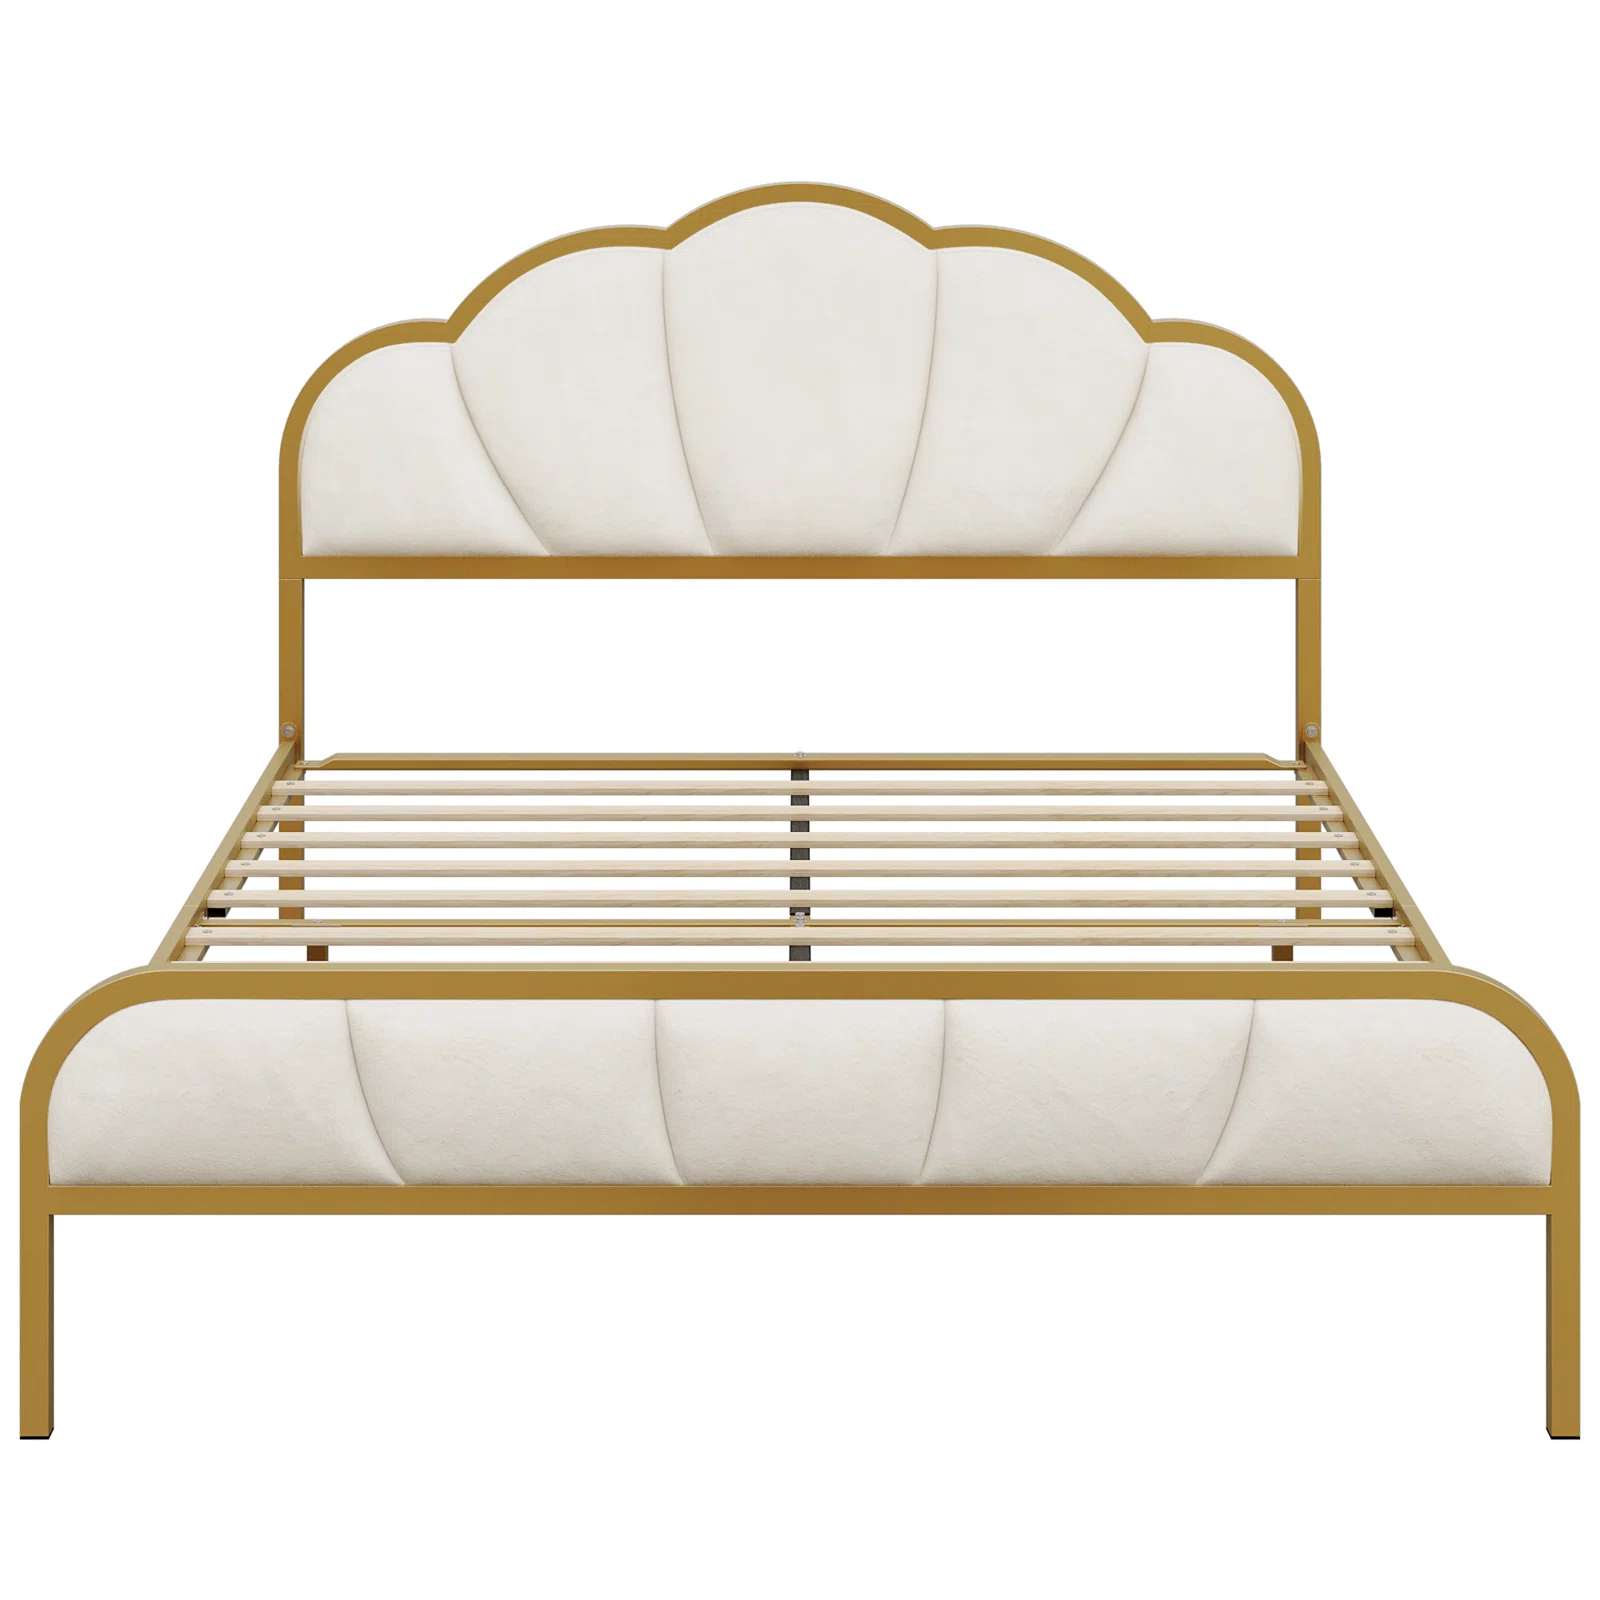 Homfa Queen Size Bed Frame, Golden Velvet Upholstered Platform Bed  with Headboard for Bedroom, Seashell Bed for Kids Girls, Beige - image 4 of 10